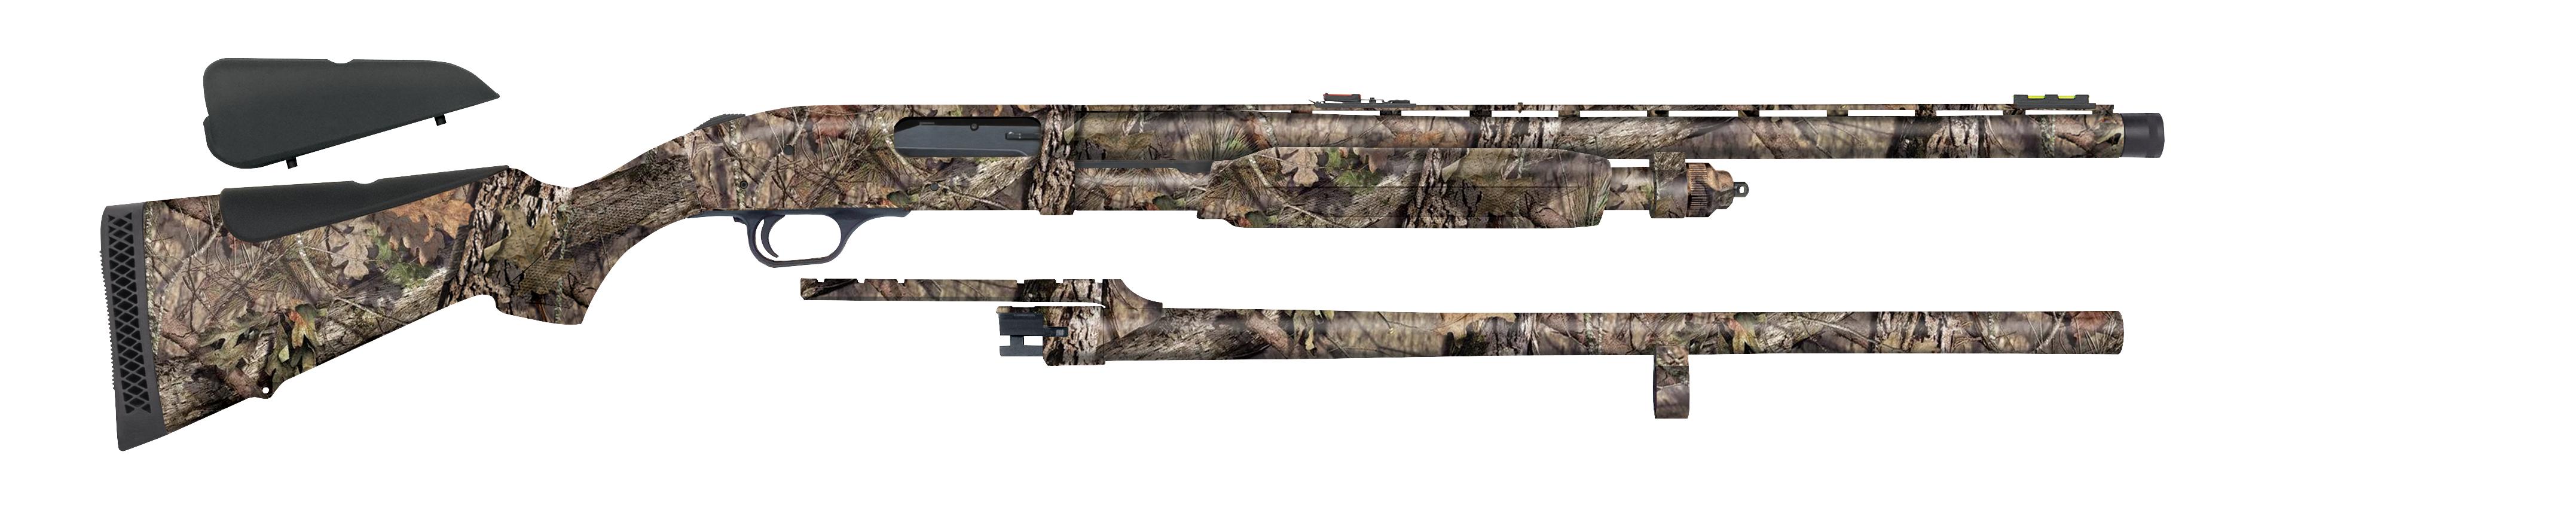 Mossberg 835 Ulti-Mag Combo Turkey/Deer Shotgun